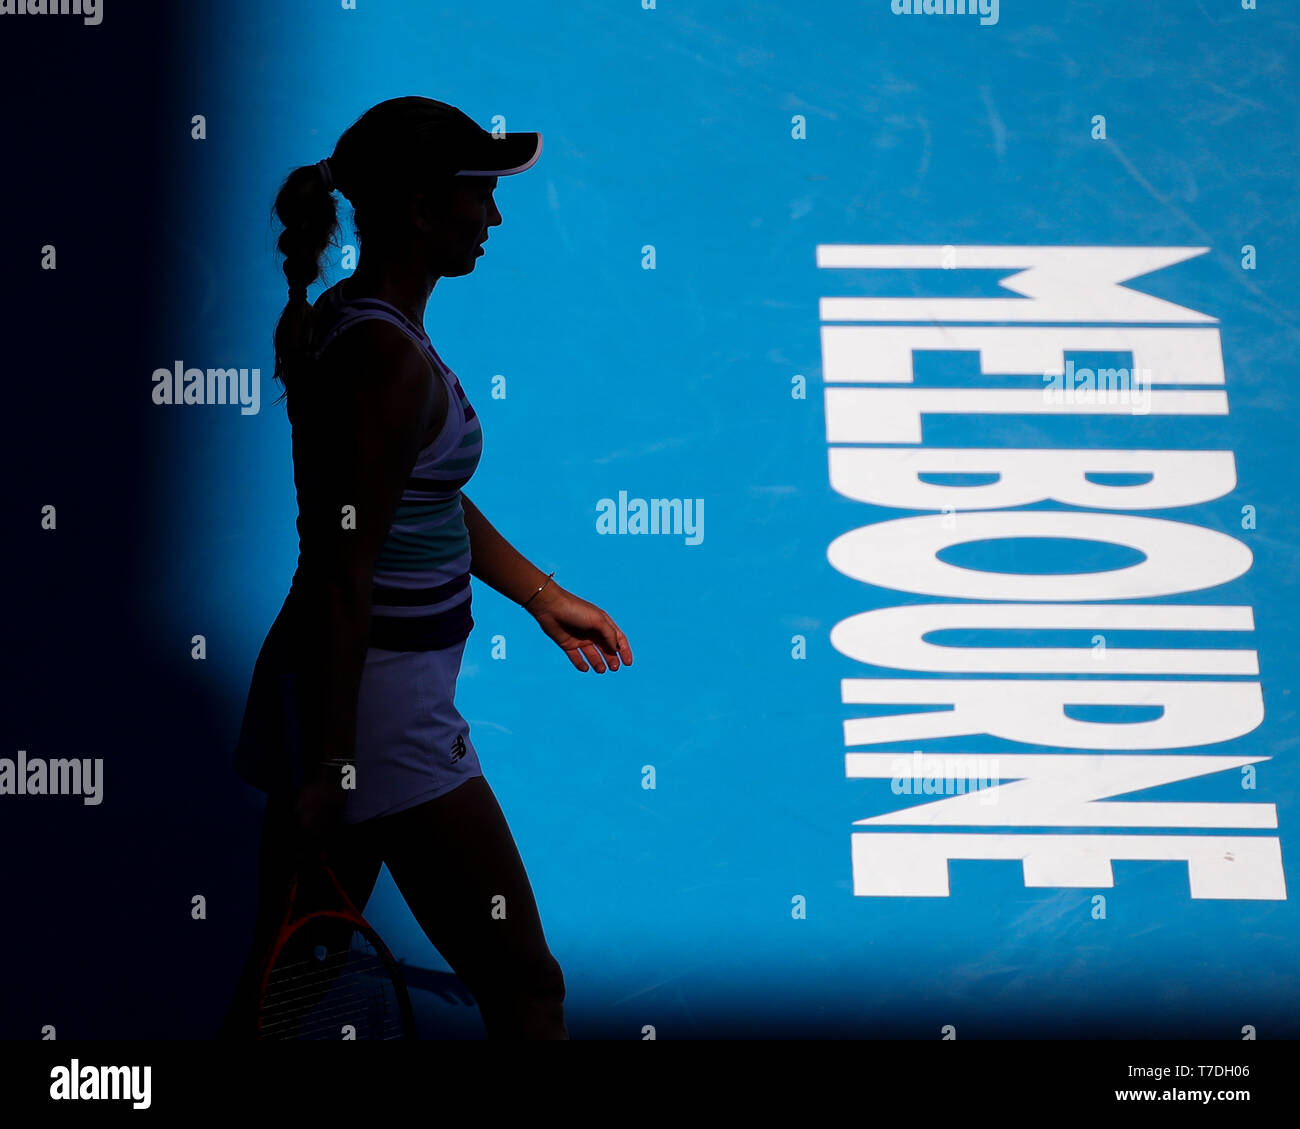 Silhouette of American tennis player Danielle Collins at the Australian Open 2019 tennis tournament, Melbourne Park, Melbourne, Victoria, Australia Stock Photo